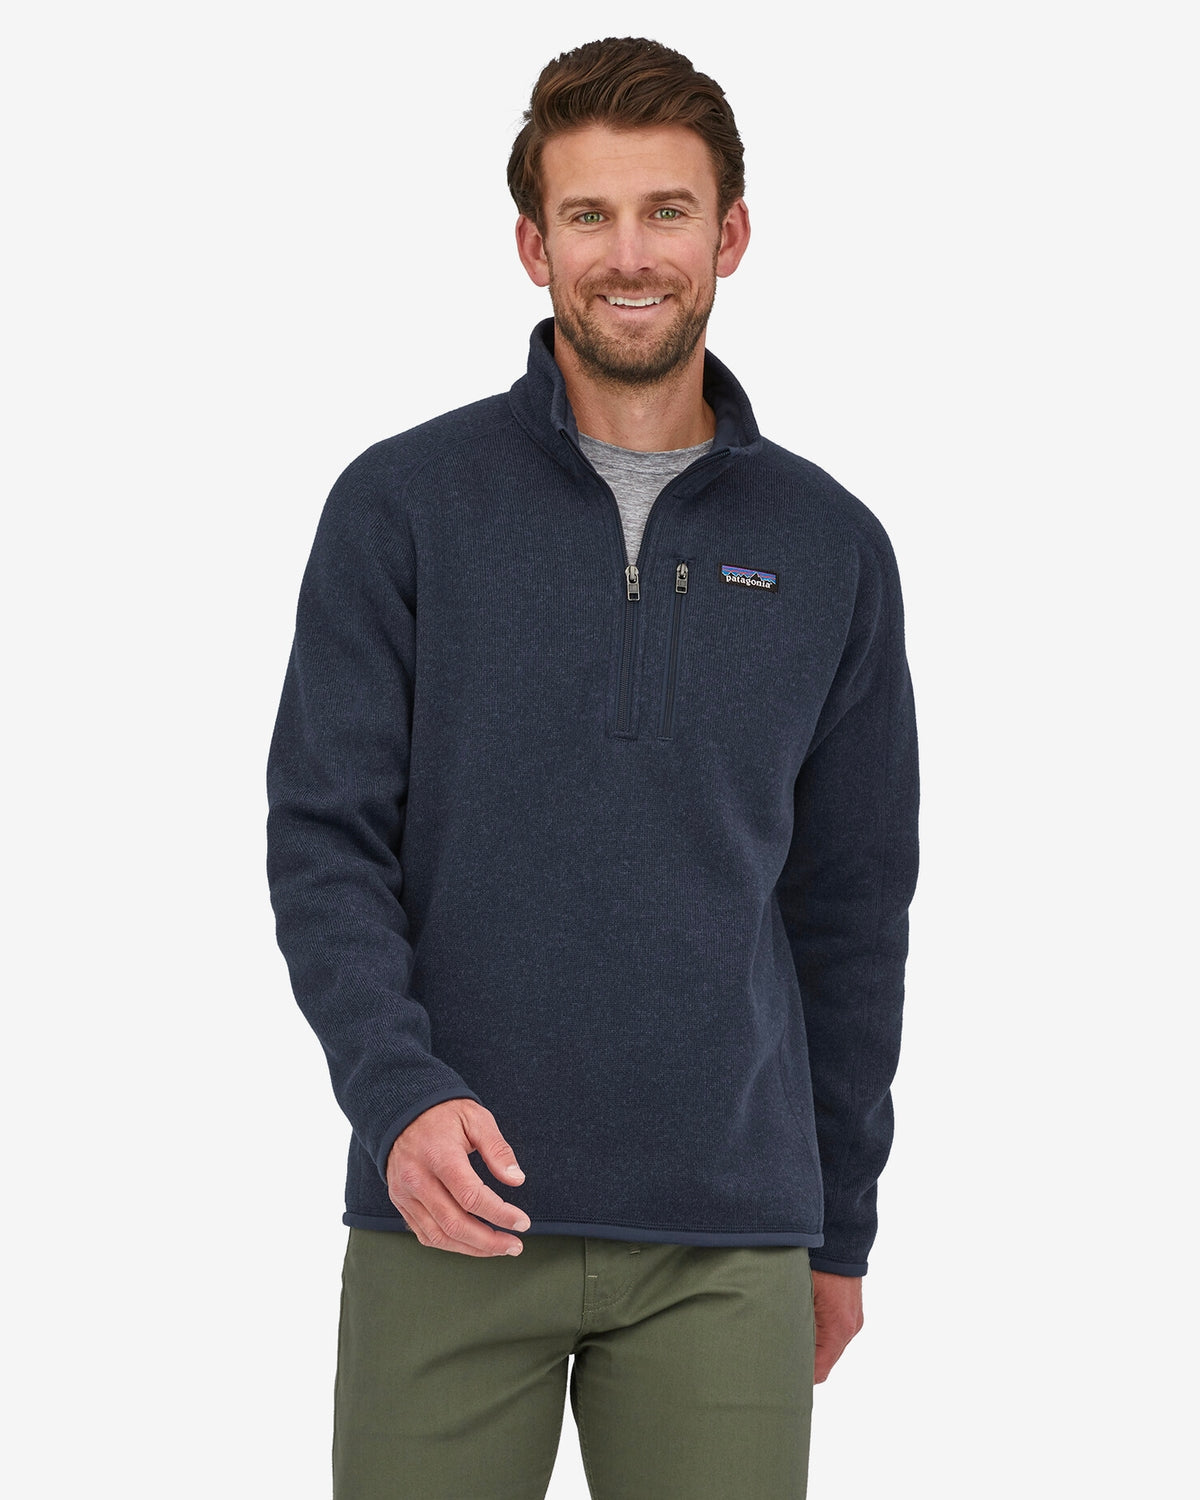 M's Better Sweater 1/4 Zip - New Navy